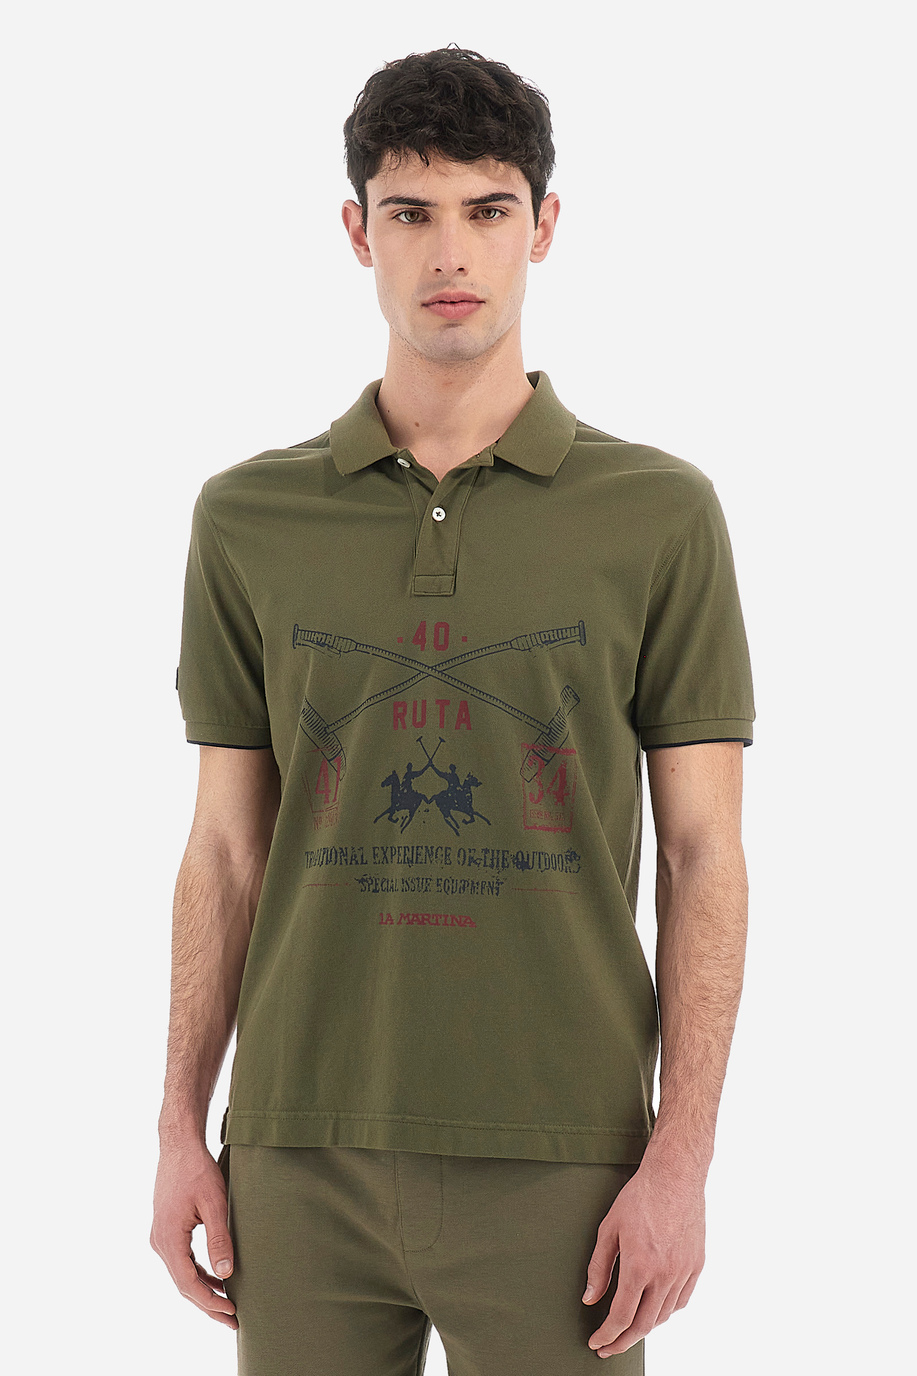 Regular fit 100% cotton short-sleeved polo shirt for men - Varda - Apparel | La Martina - Official Online Shop